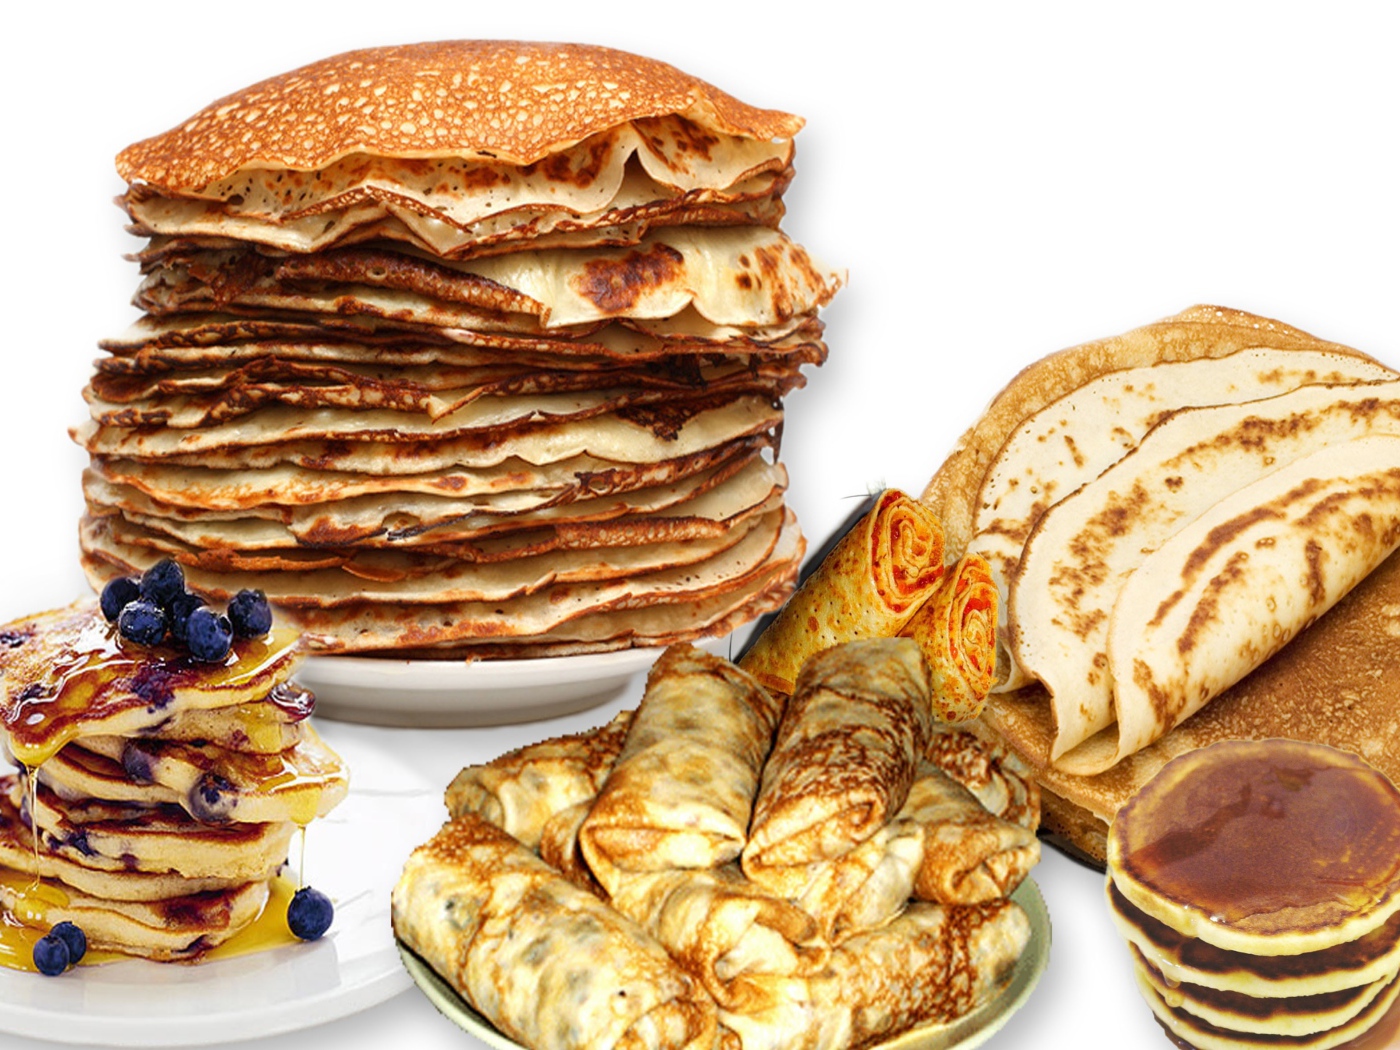 Abundance of pancakes on Shrove Tuesday